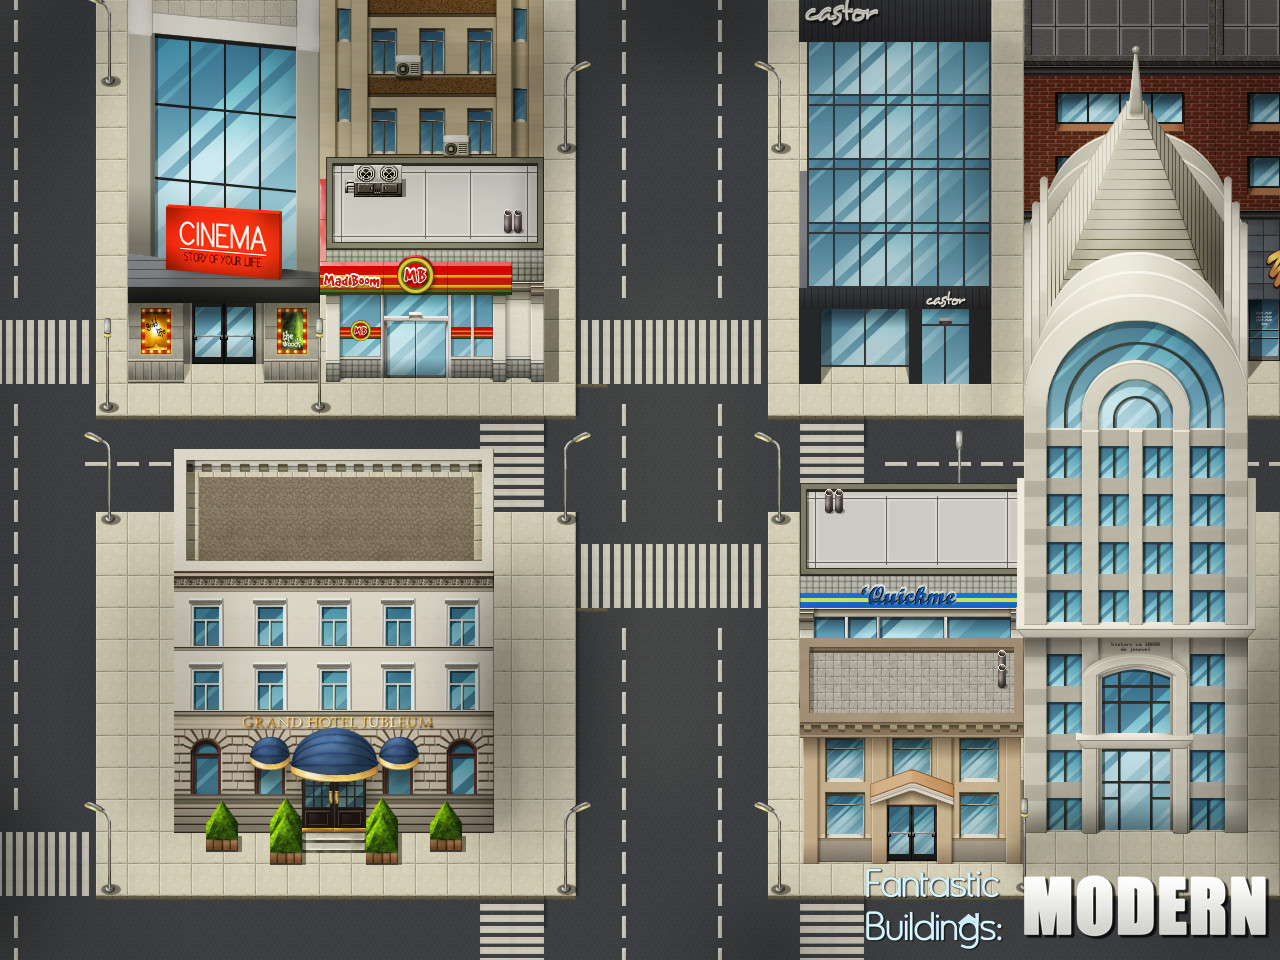 RPG Maker VX - Ace Fantastic Buildings: Modern DLC EU Steam CD Key $5.07